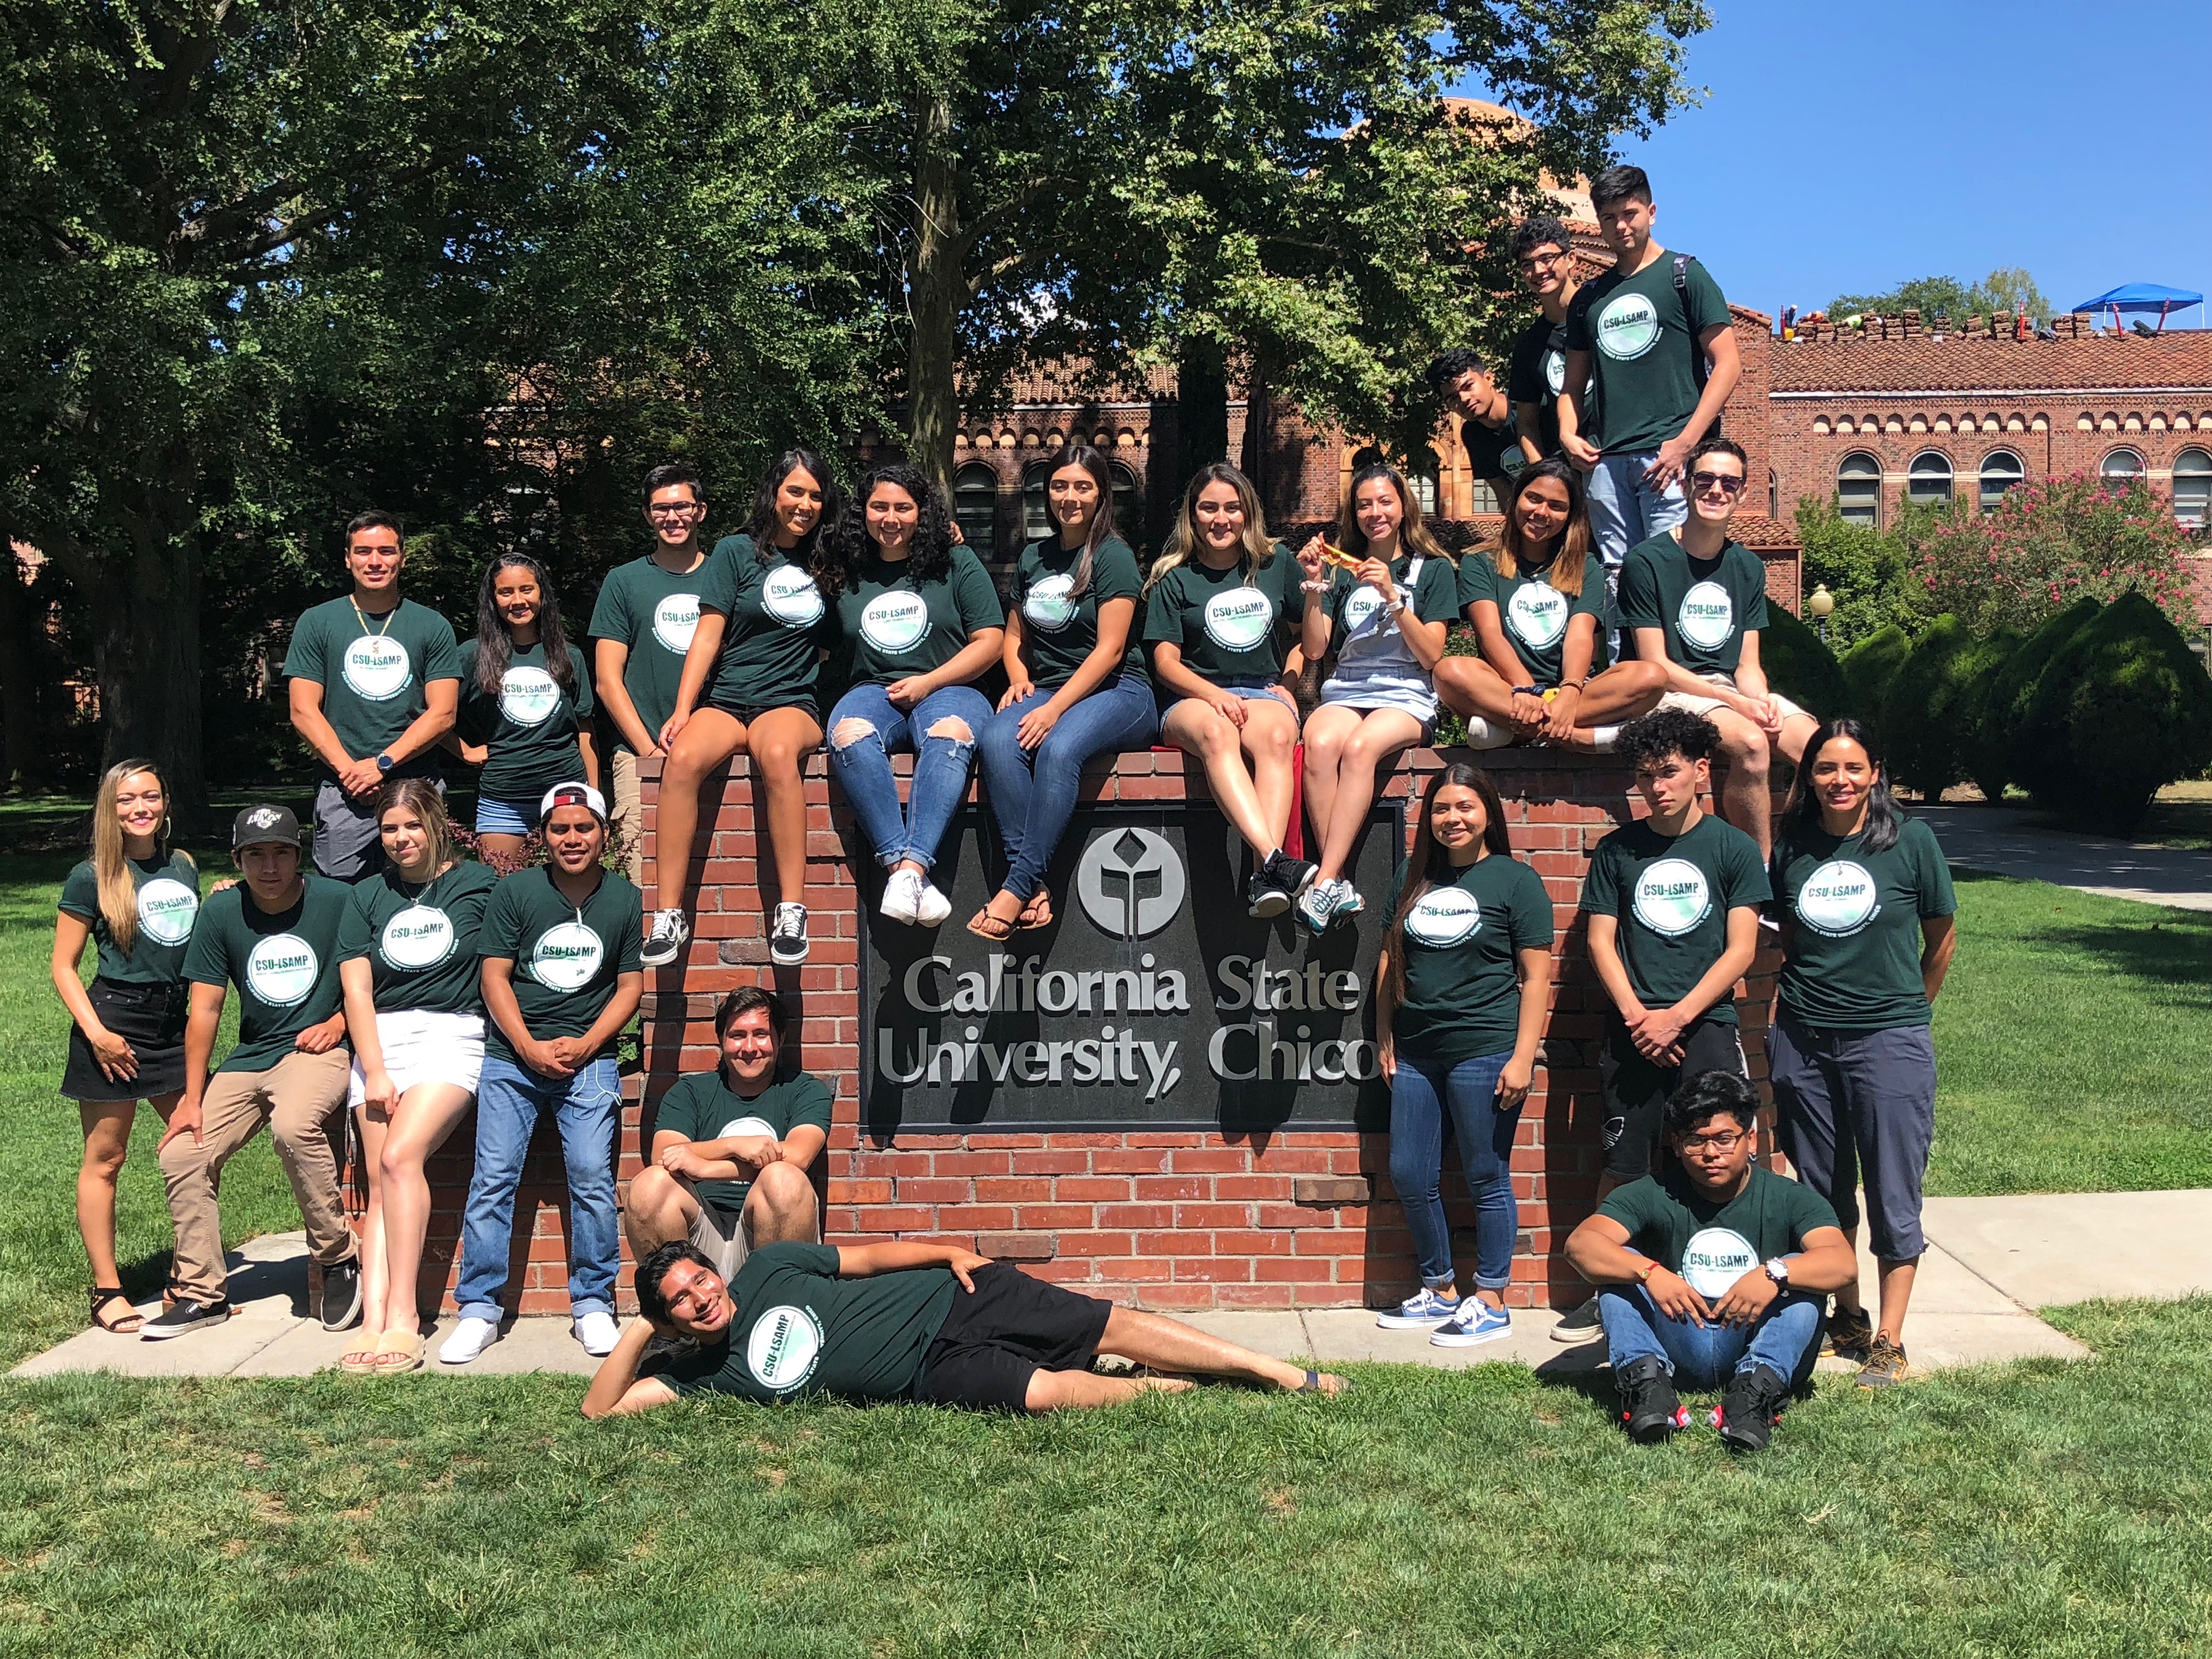 2019 LSAMP Summer Calculus Boot Camp participants